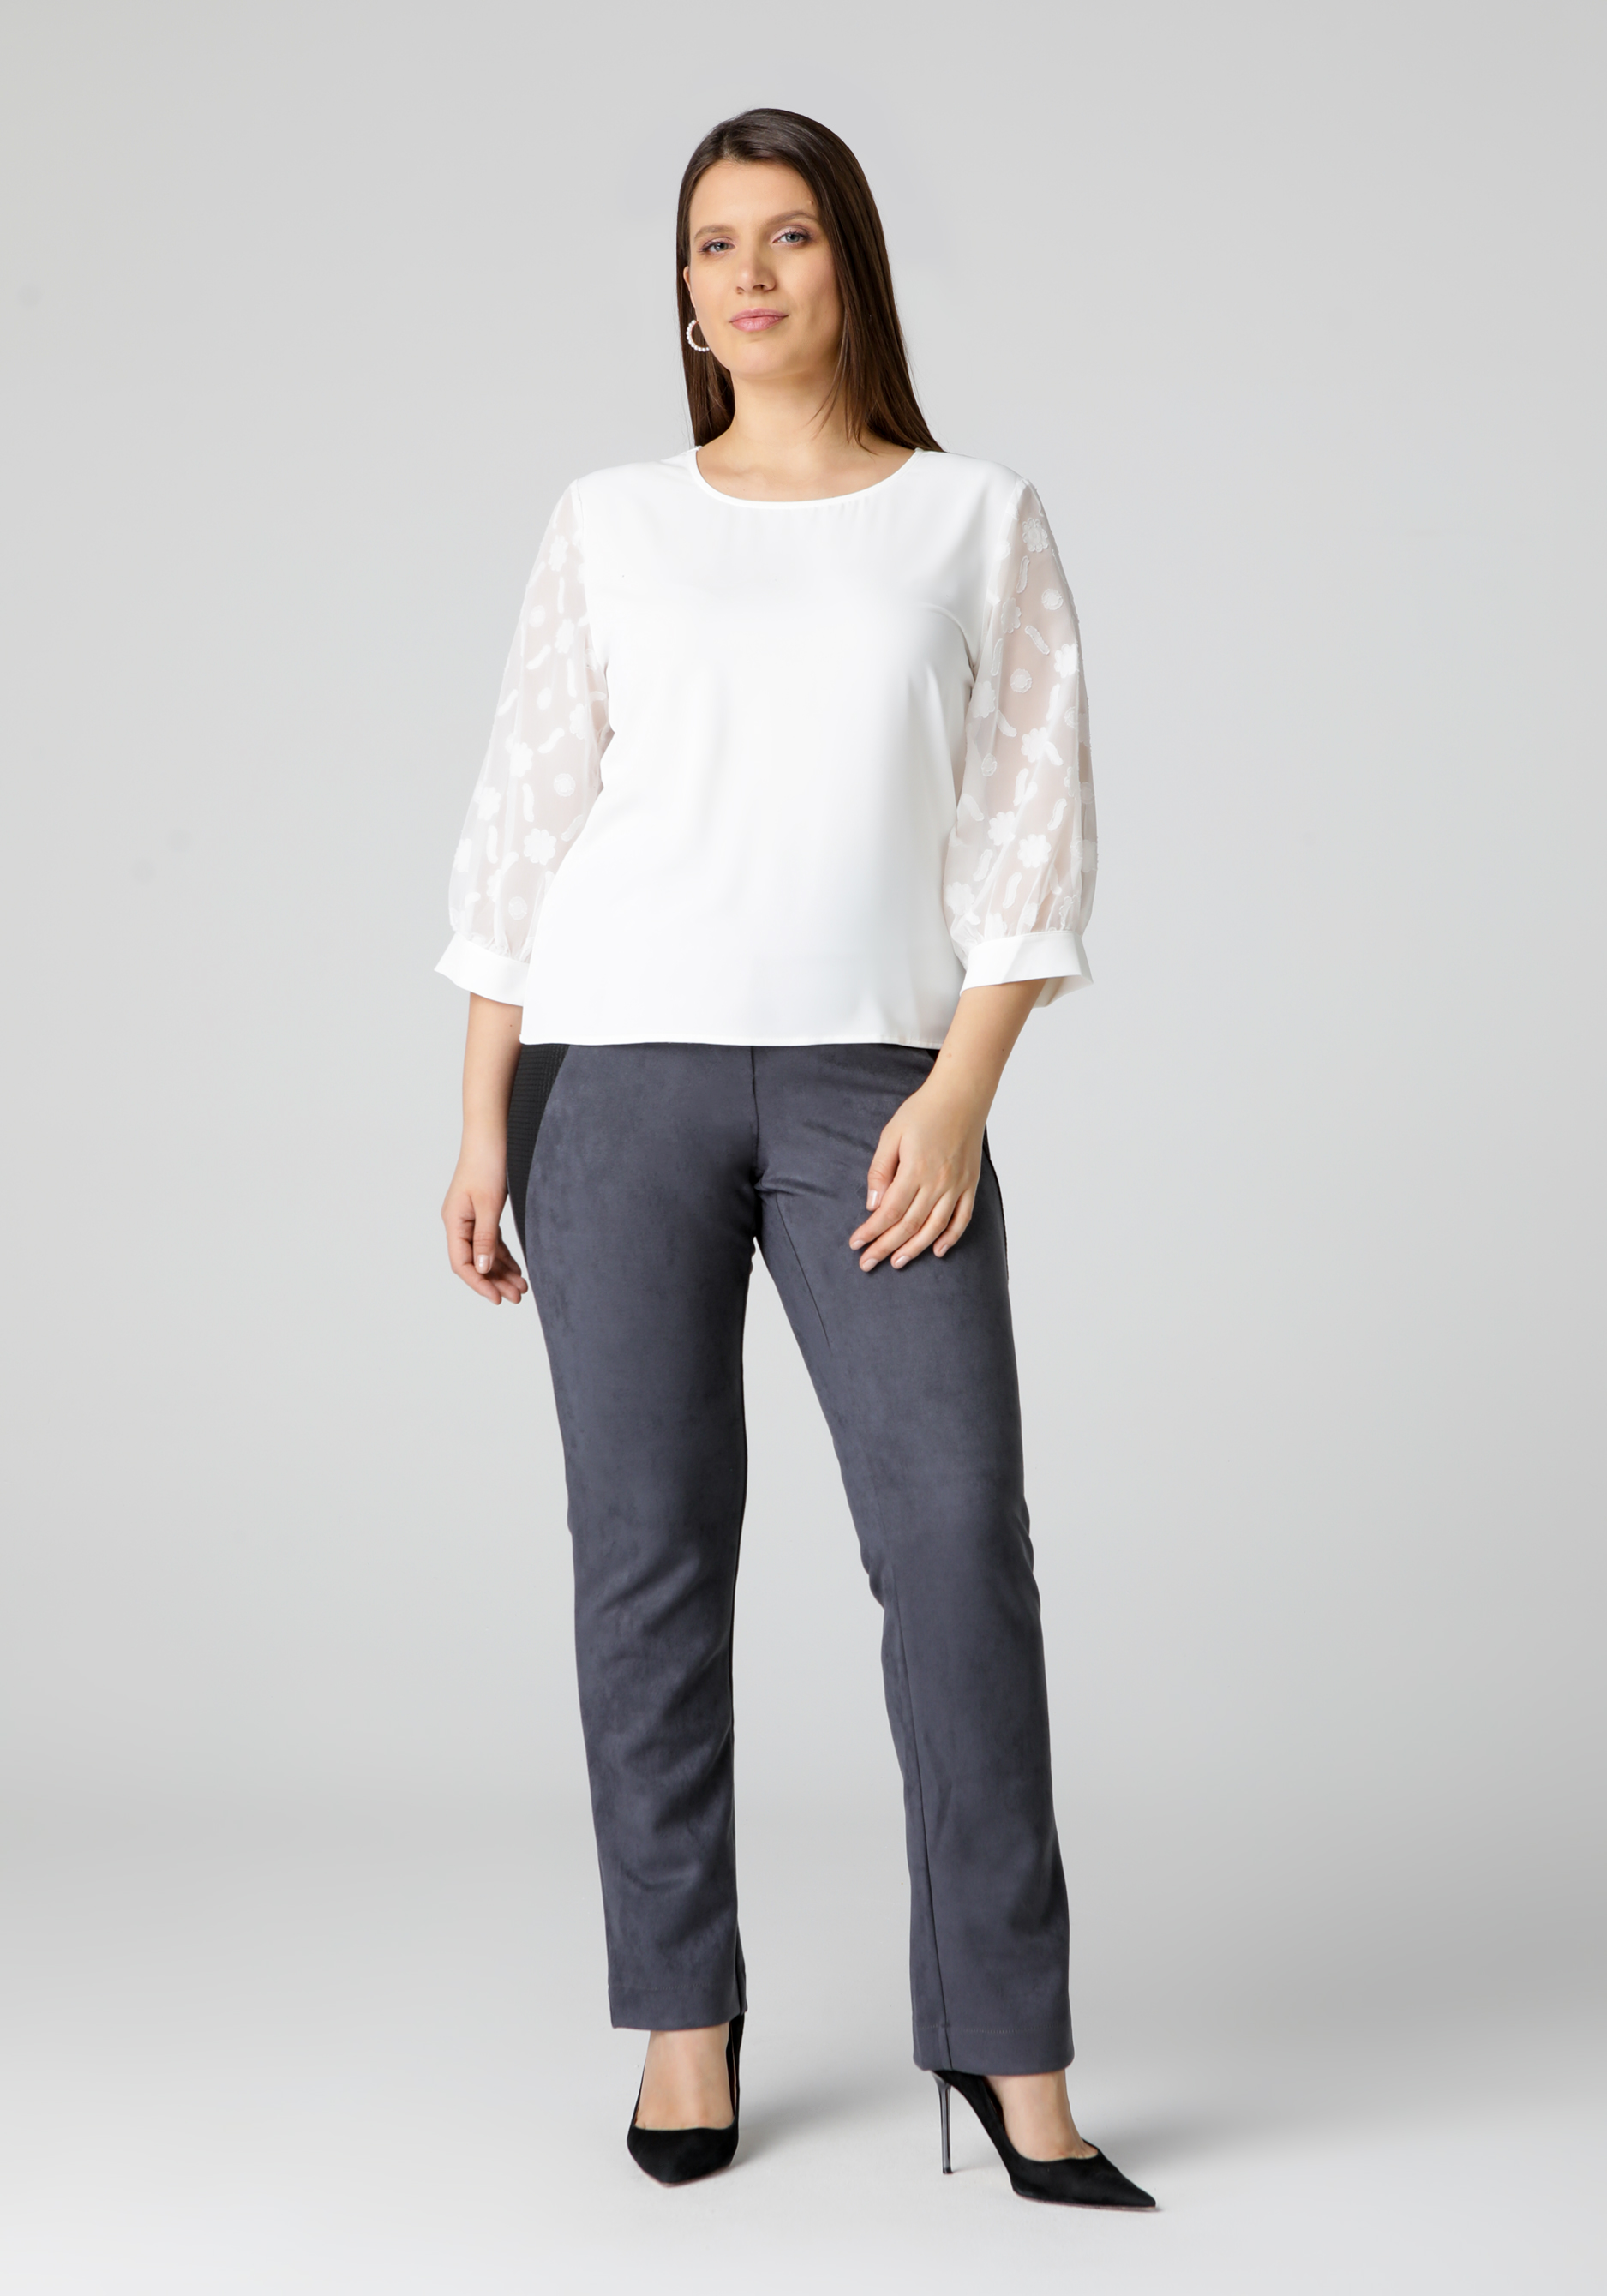 Блуза с шифоновыми рукавами 3 / 4 No name, размер 52-54, цвет белый - фото 6